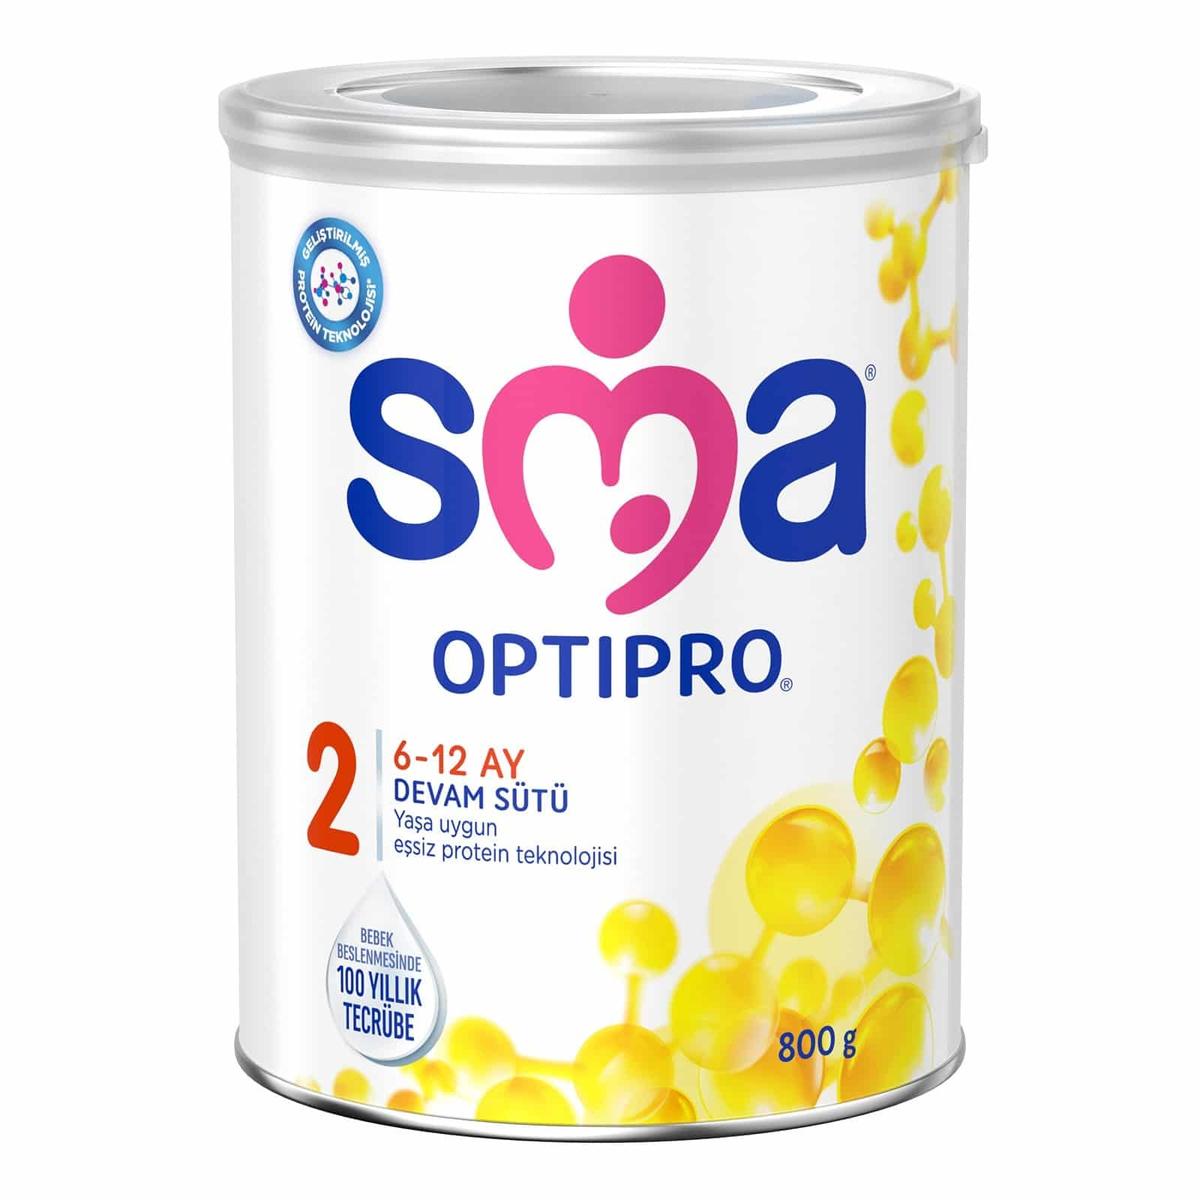 SMA OPTIPRO Devam Sütü